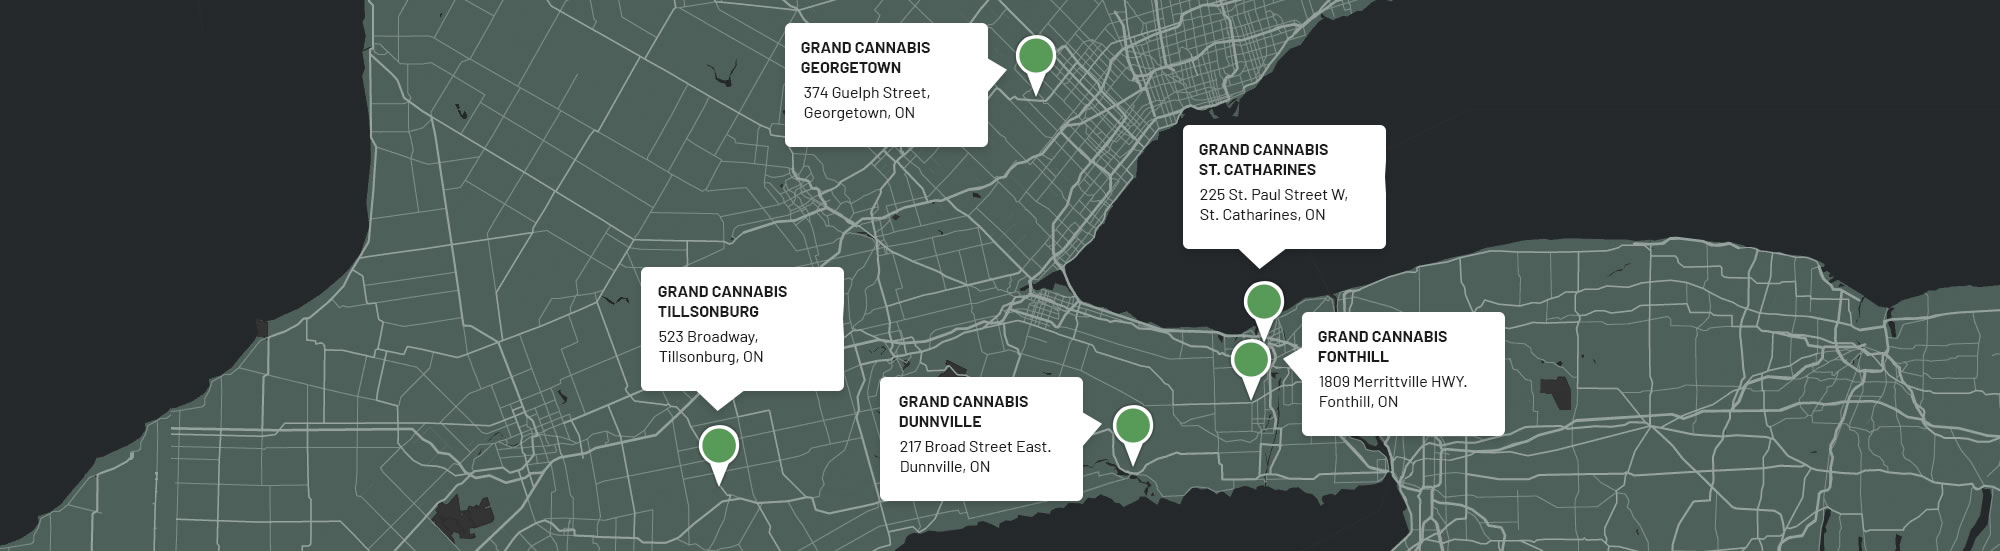 grand cannabis location map